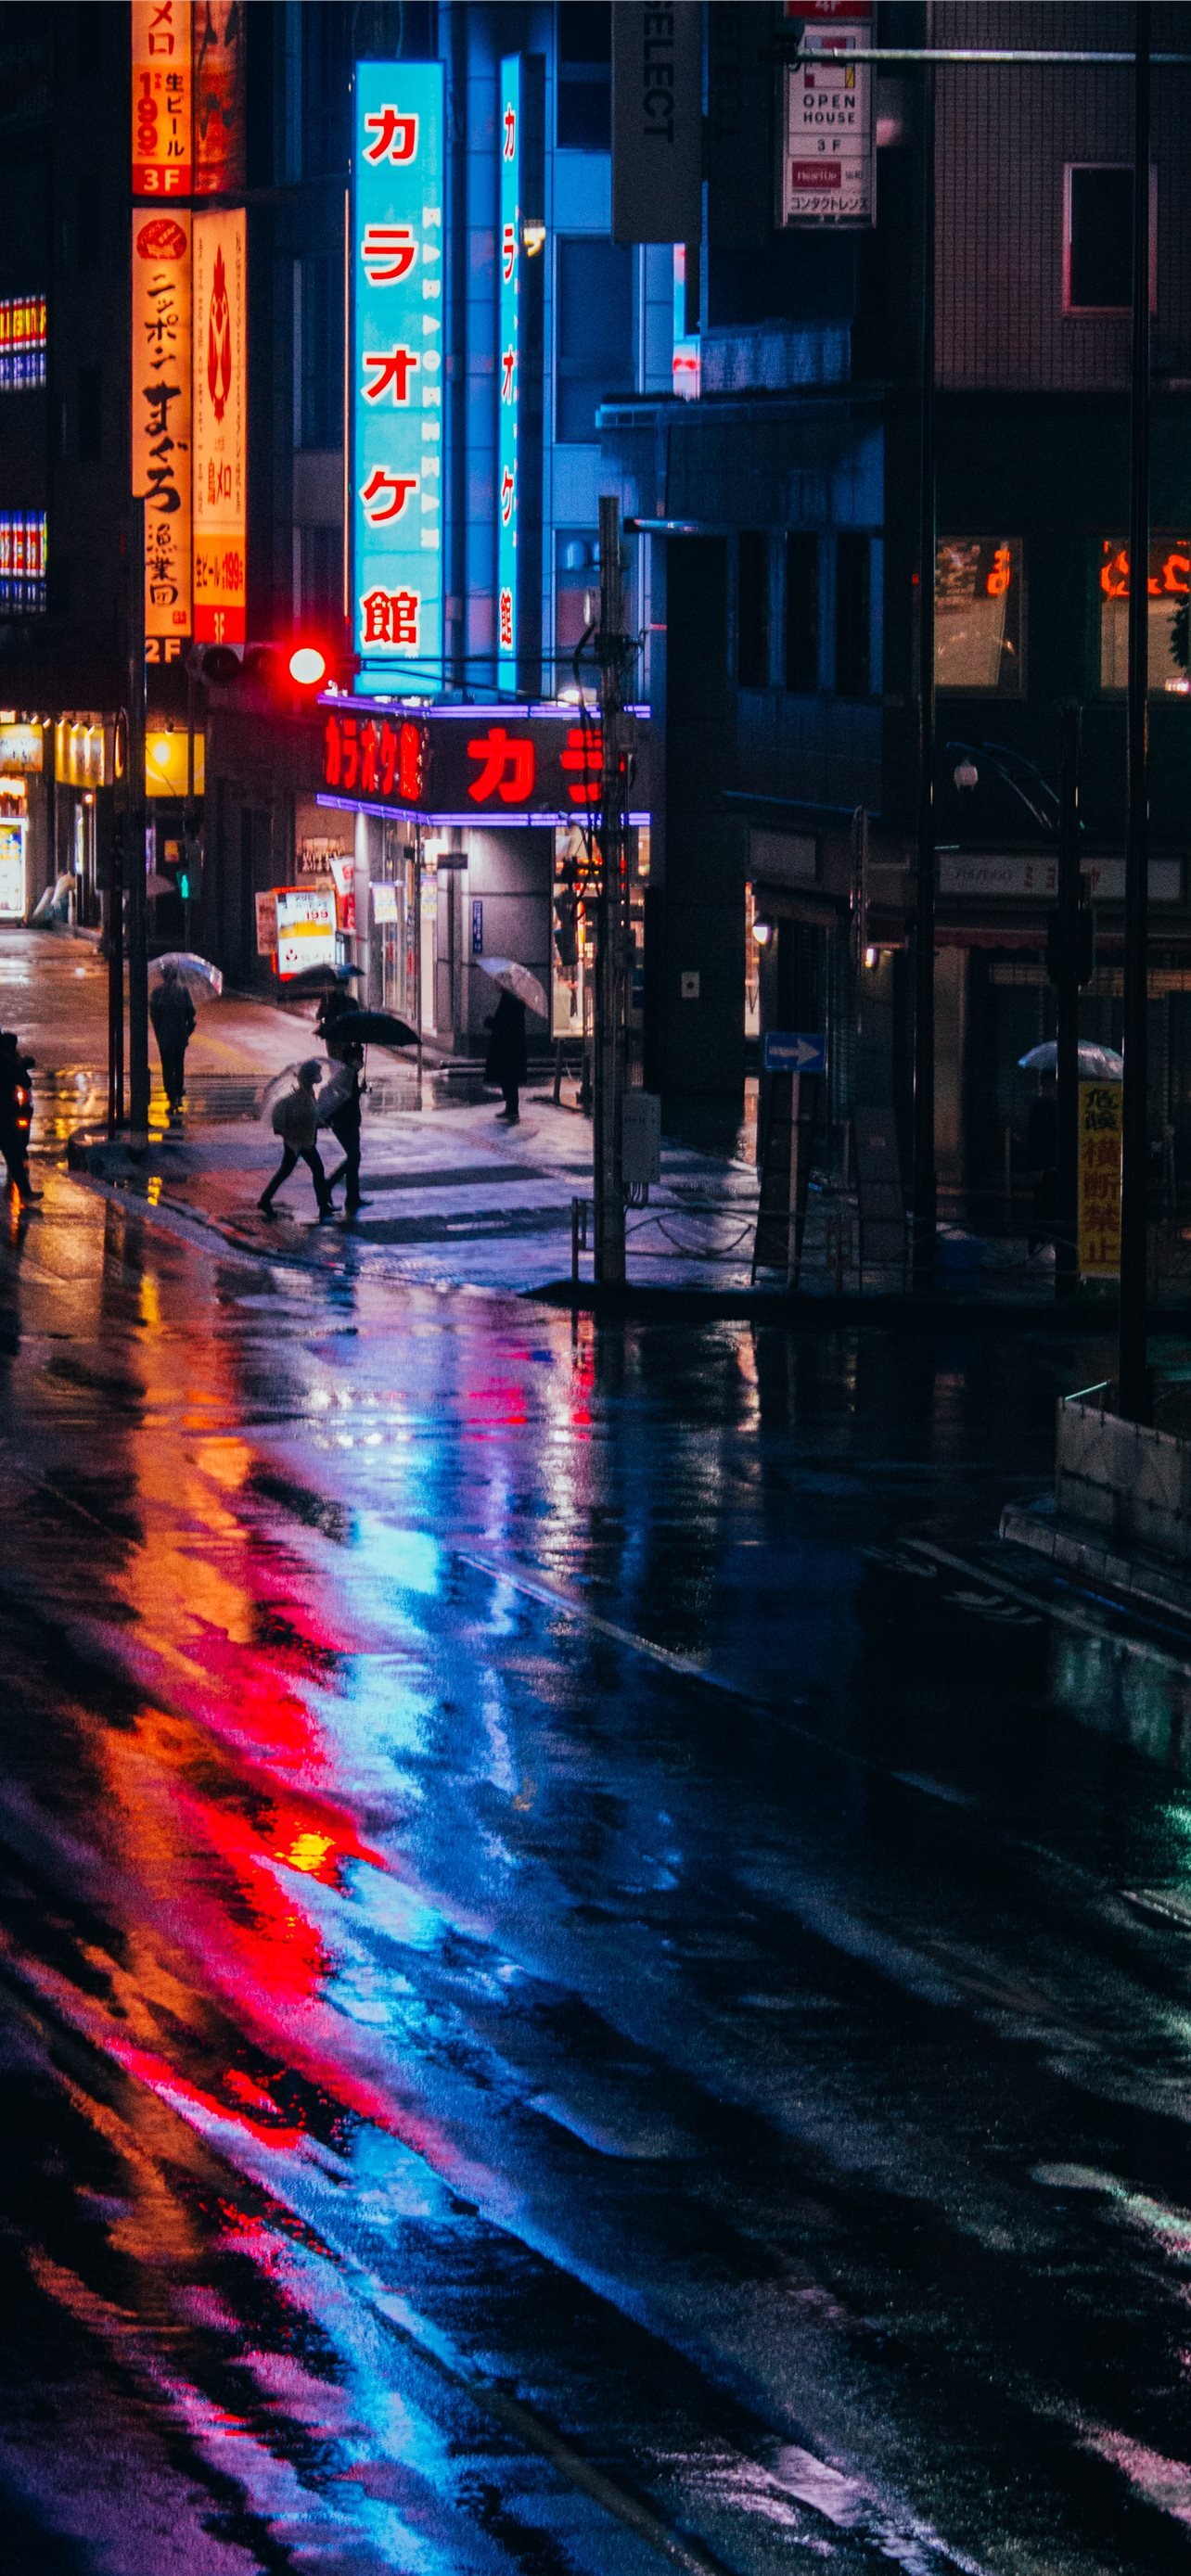 people walking on street during night time iPhone Wallpaper Free Download